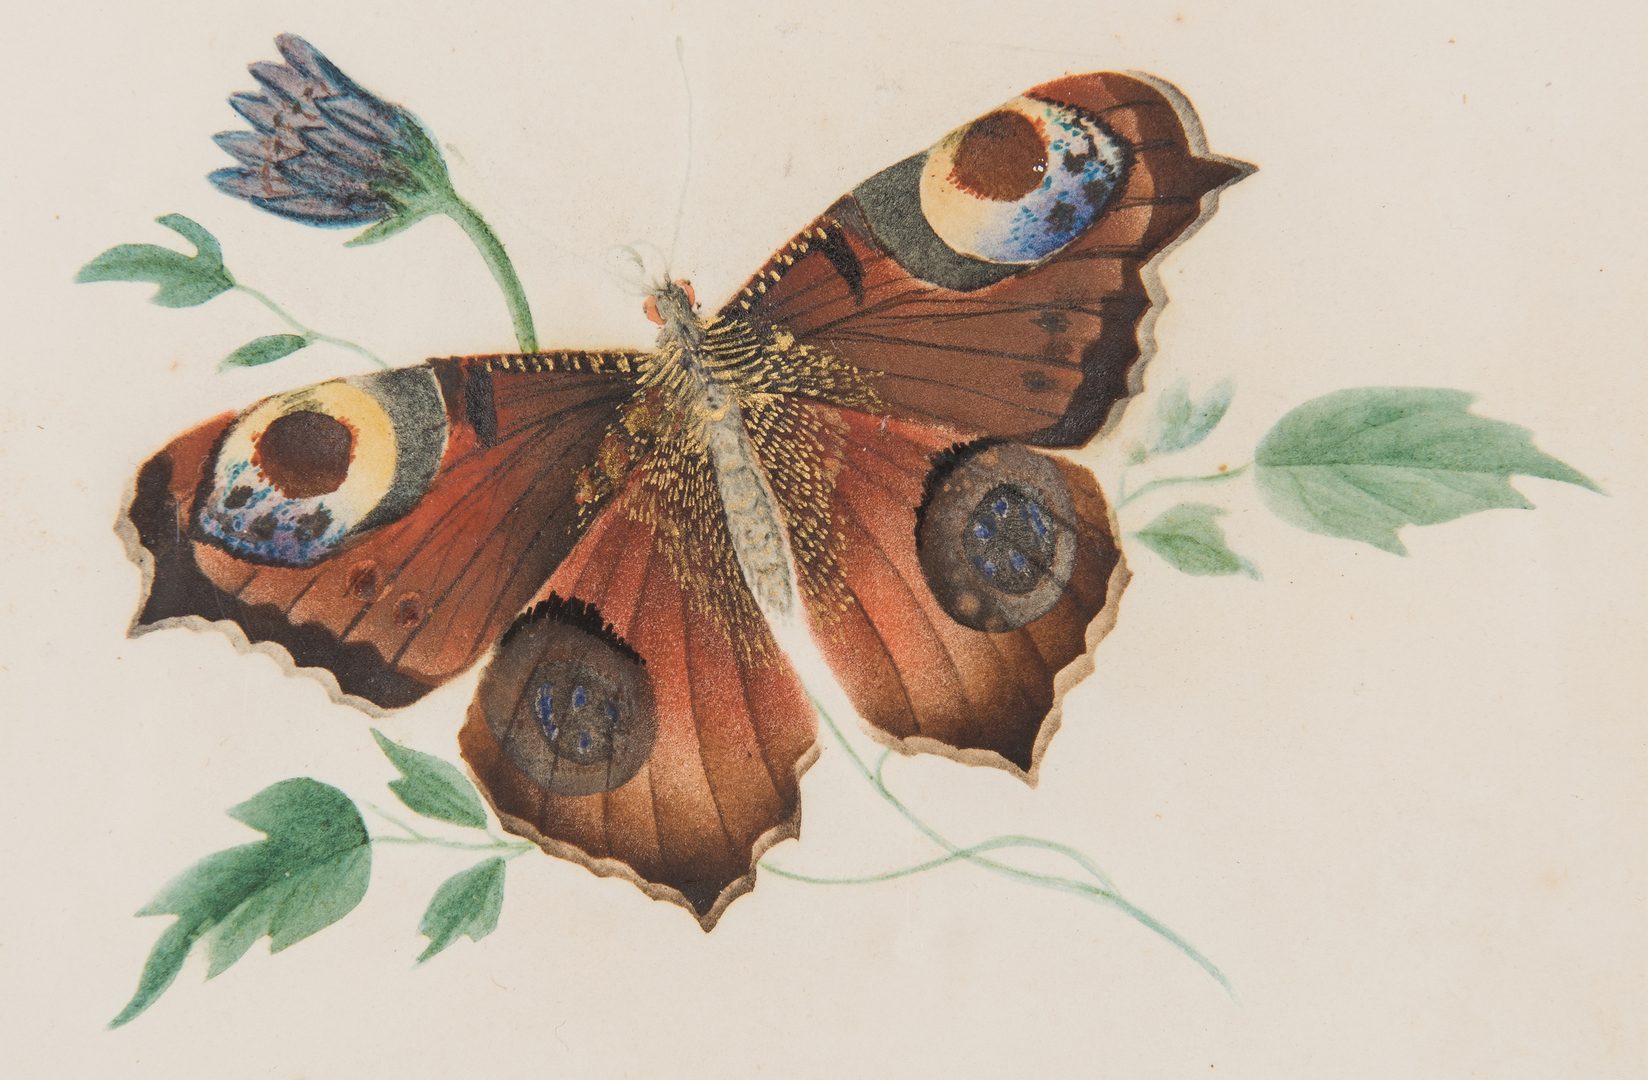 Lot 197: 3 European Watercolor Paintings, incl. Manor House, Butterflies